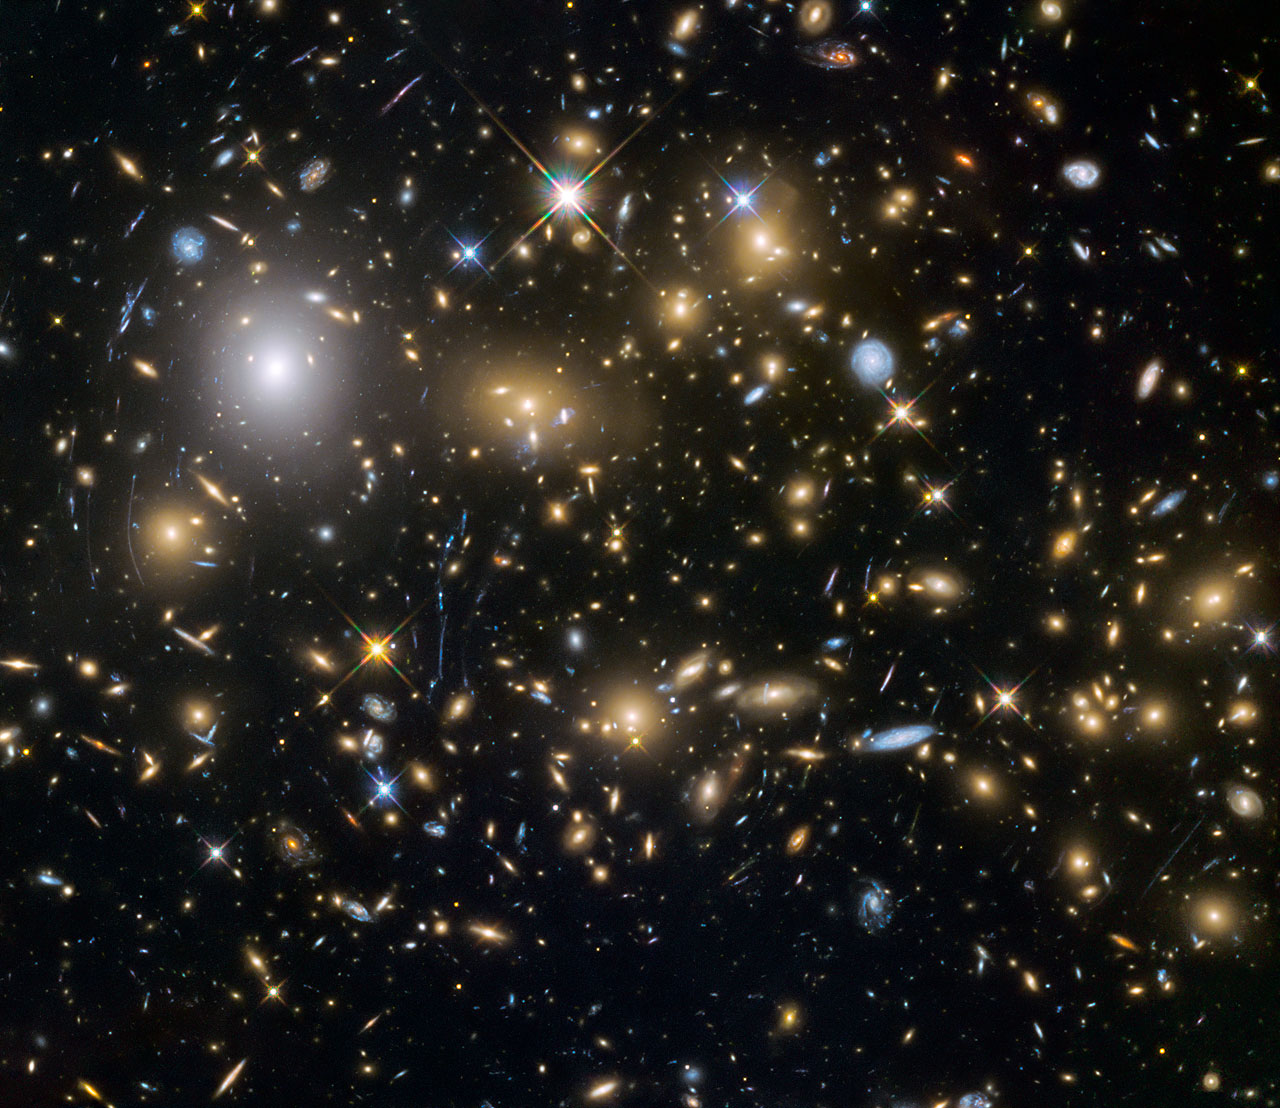 Hubble Space Telescope deep field of galaxies